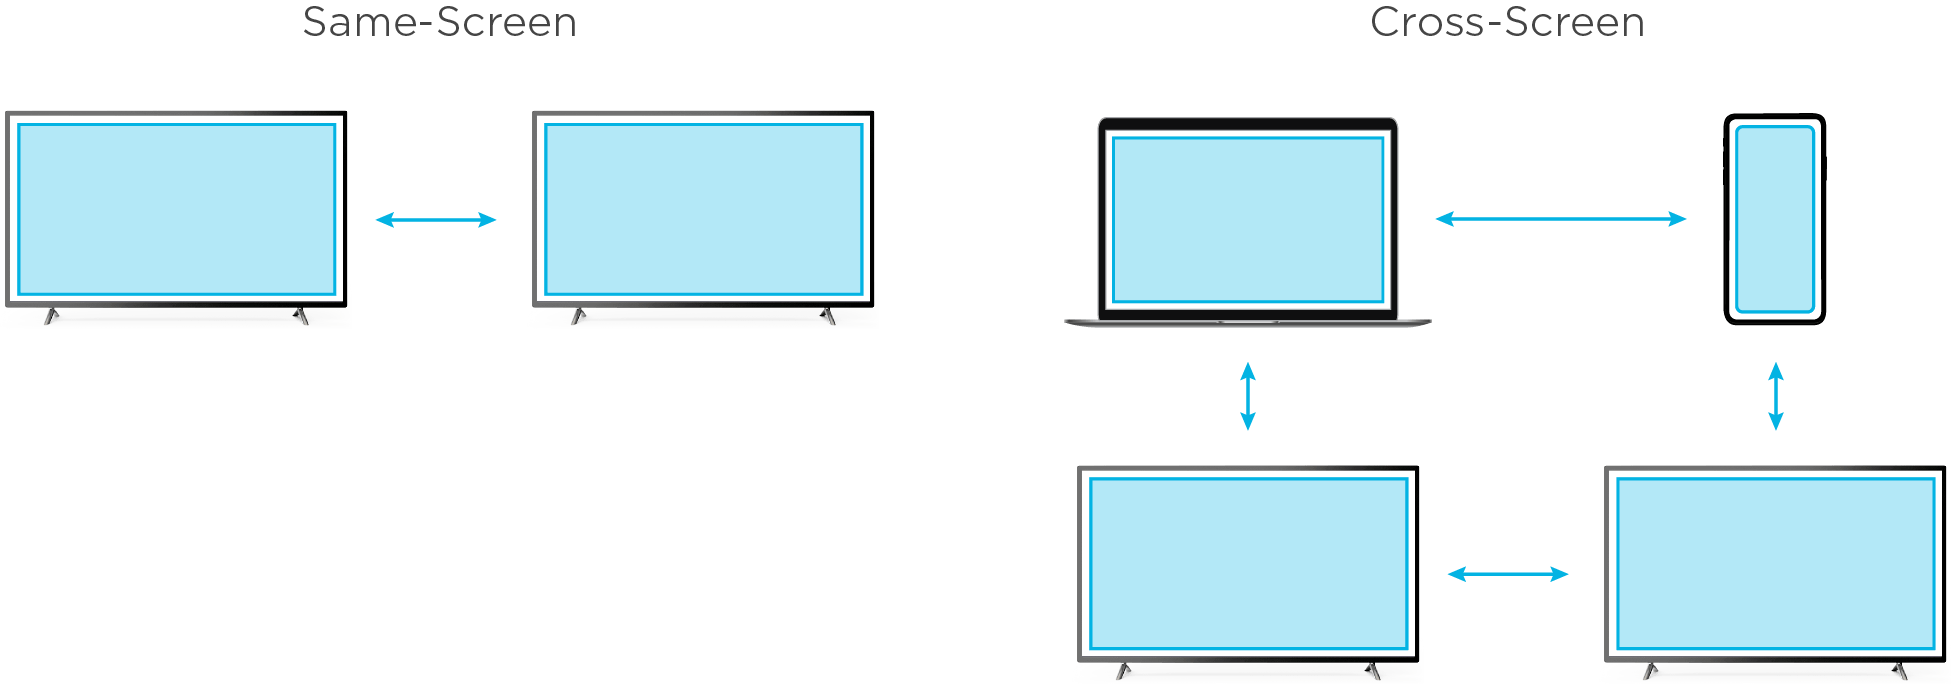 Roku same screen and cross-screen attribution flow diagram